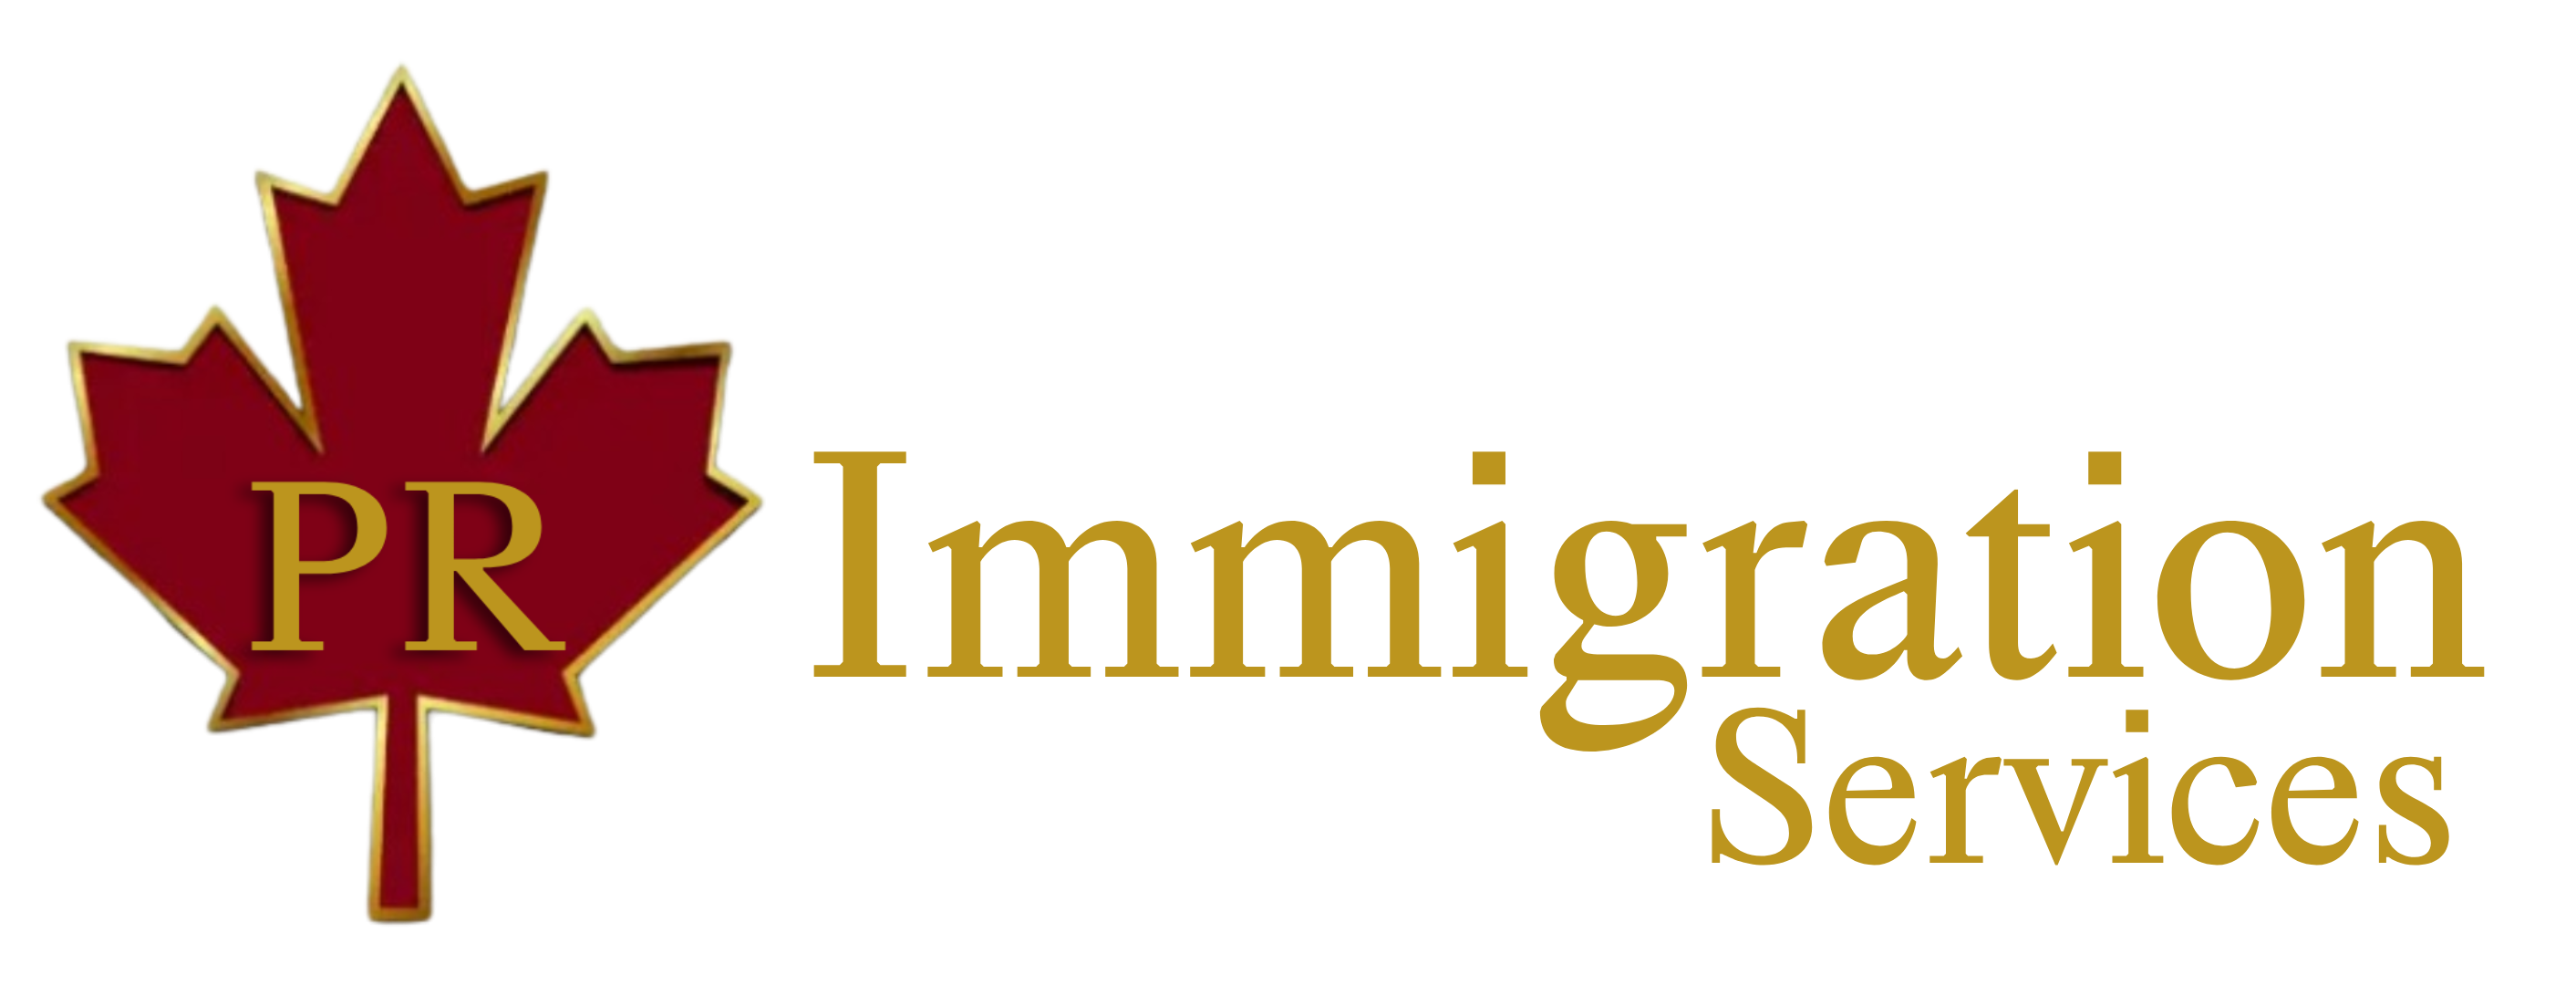 PR Immigration Services cover